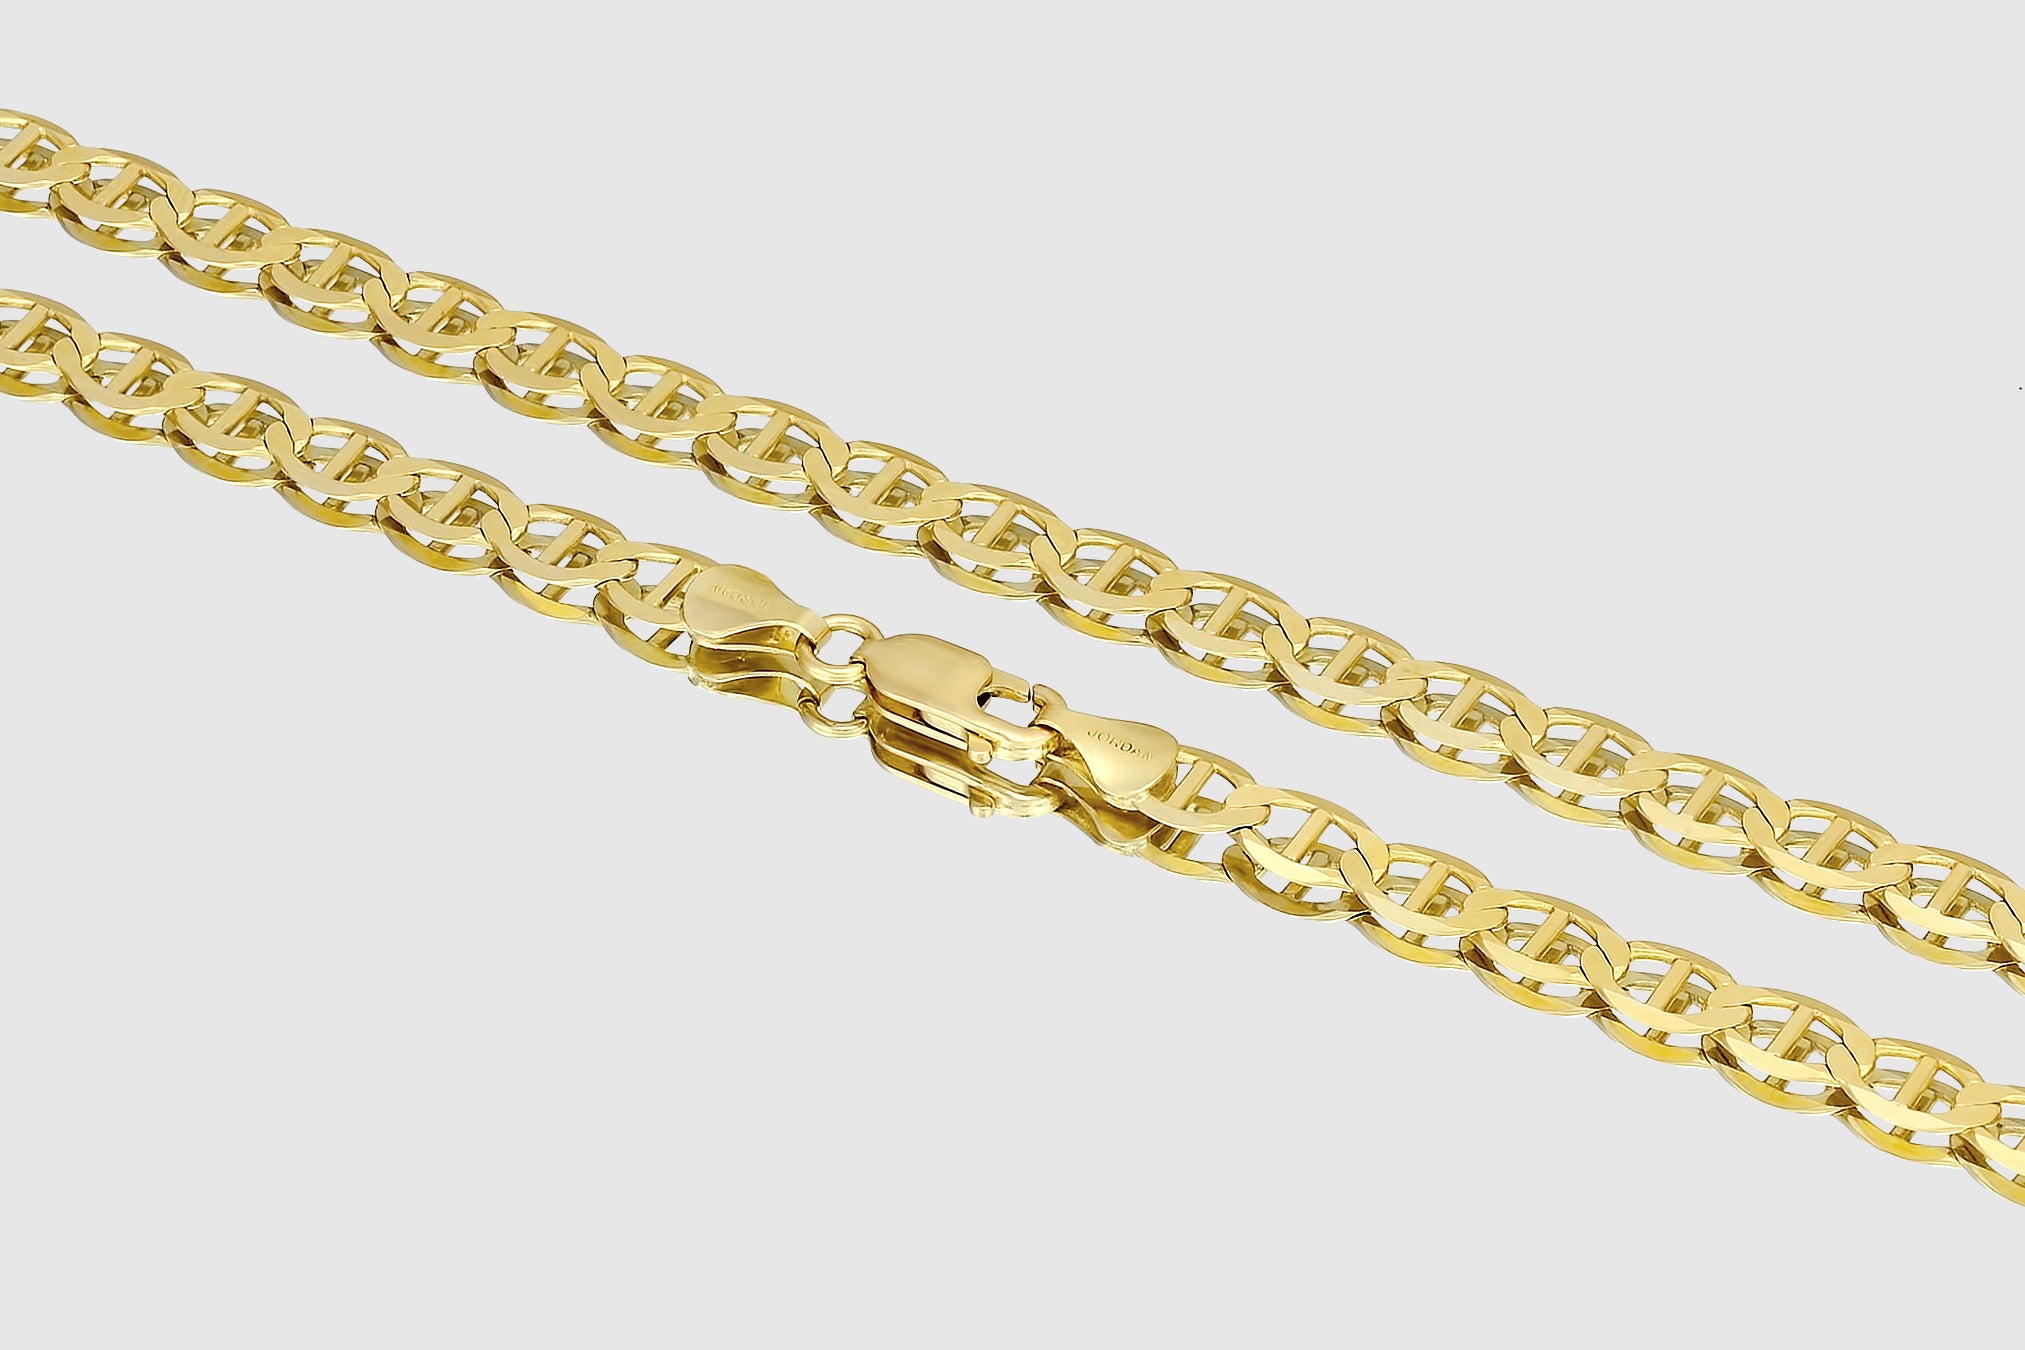 14k gold gucci chain